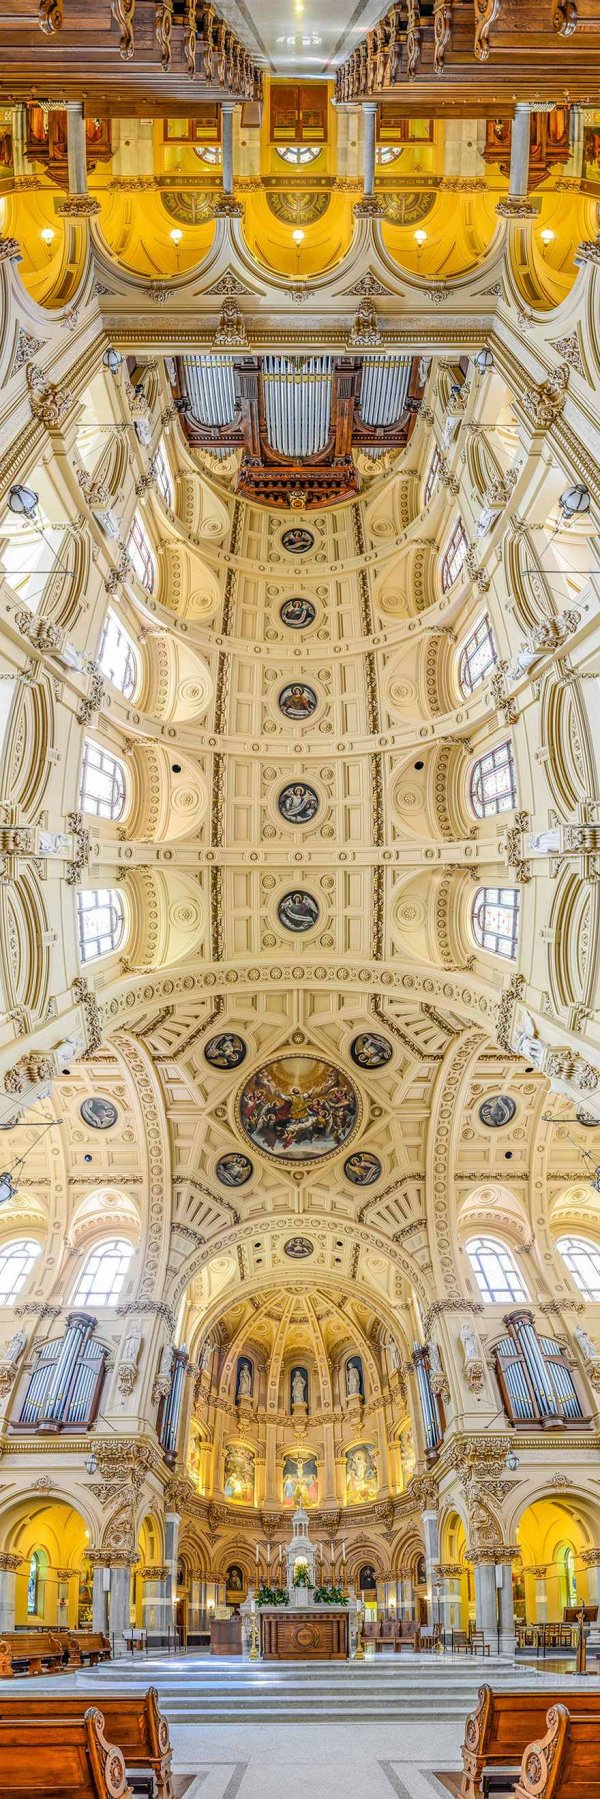 Церковная архитектура в панорамных снимках Ричарда Силвера (7 фото)